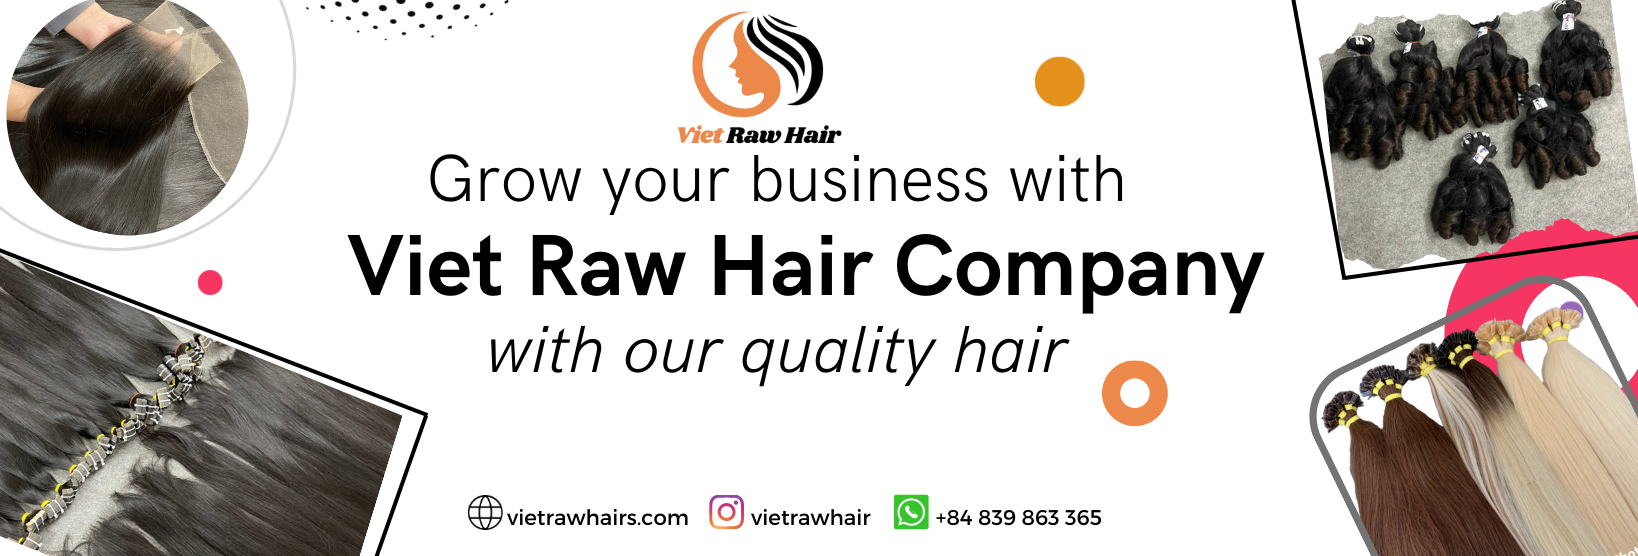 Viet Raw Hair Company Limited